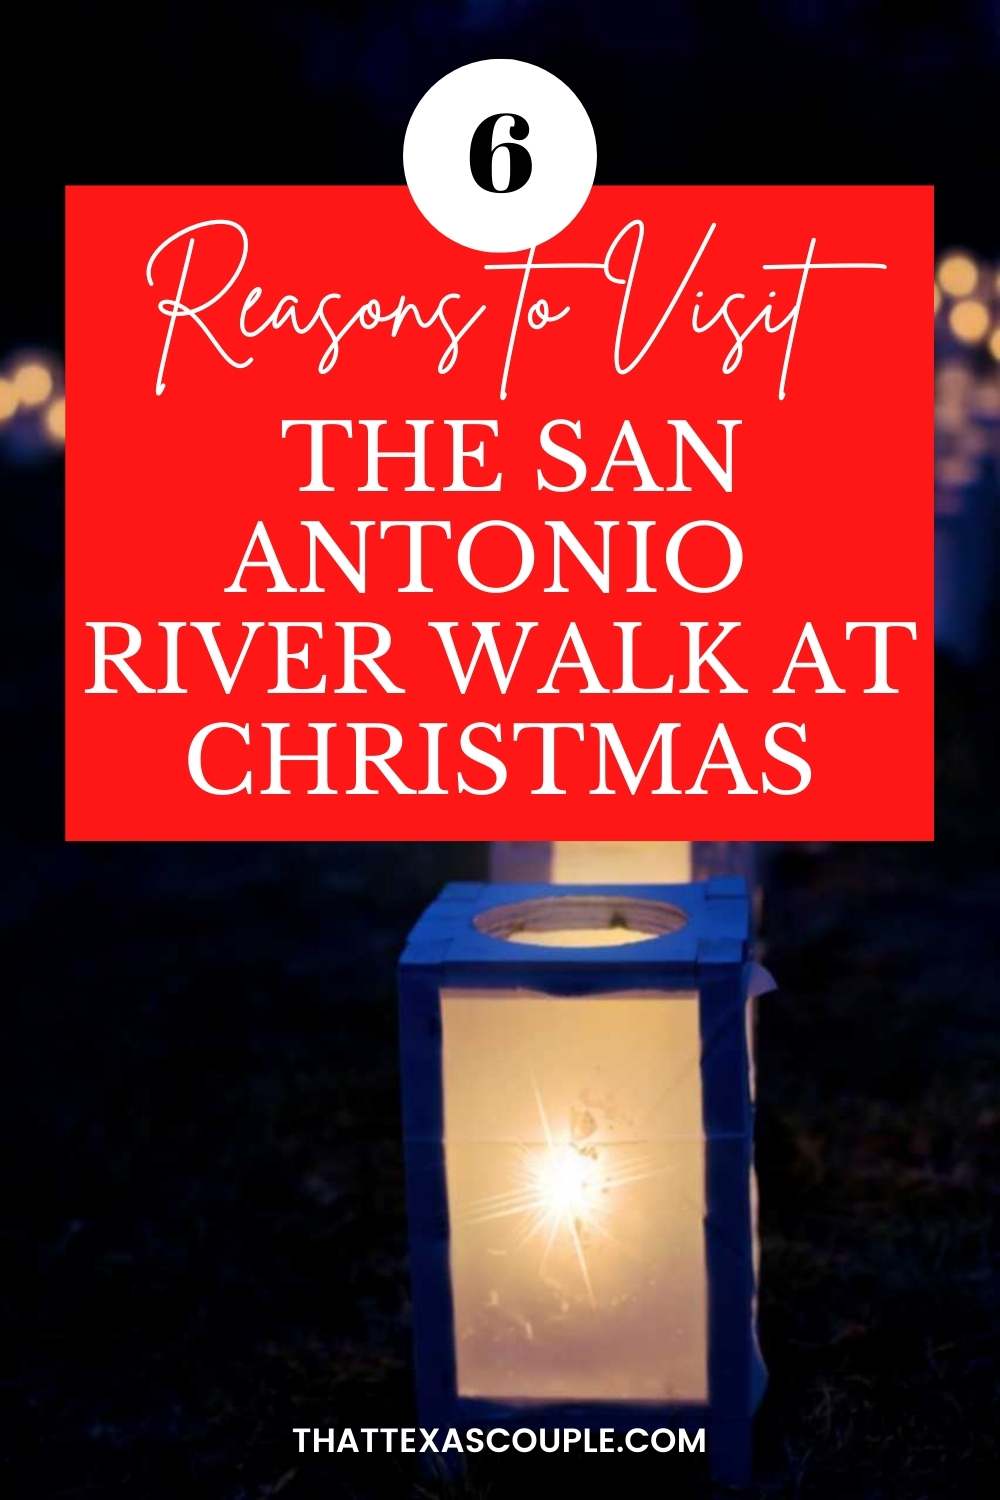 San Antonio River Walk at Christmas